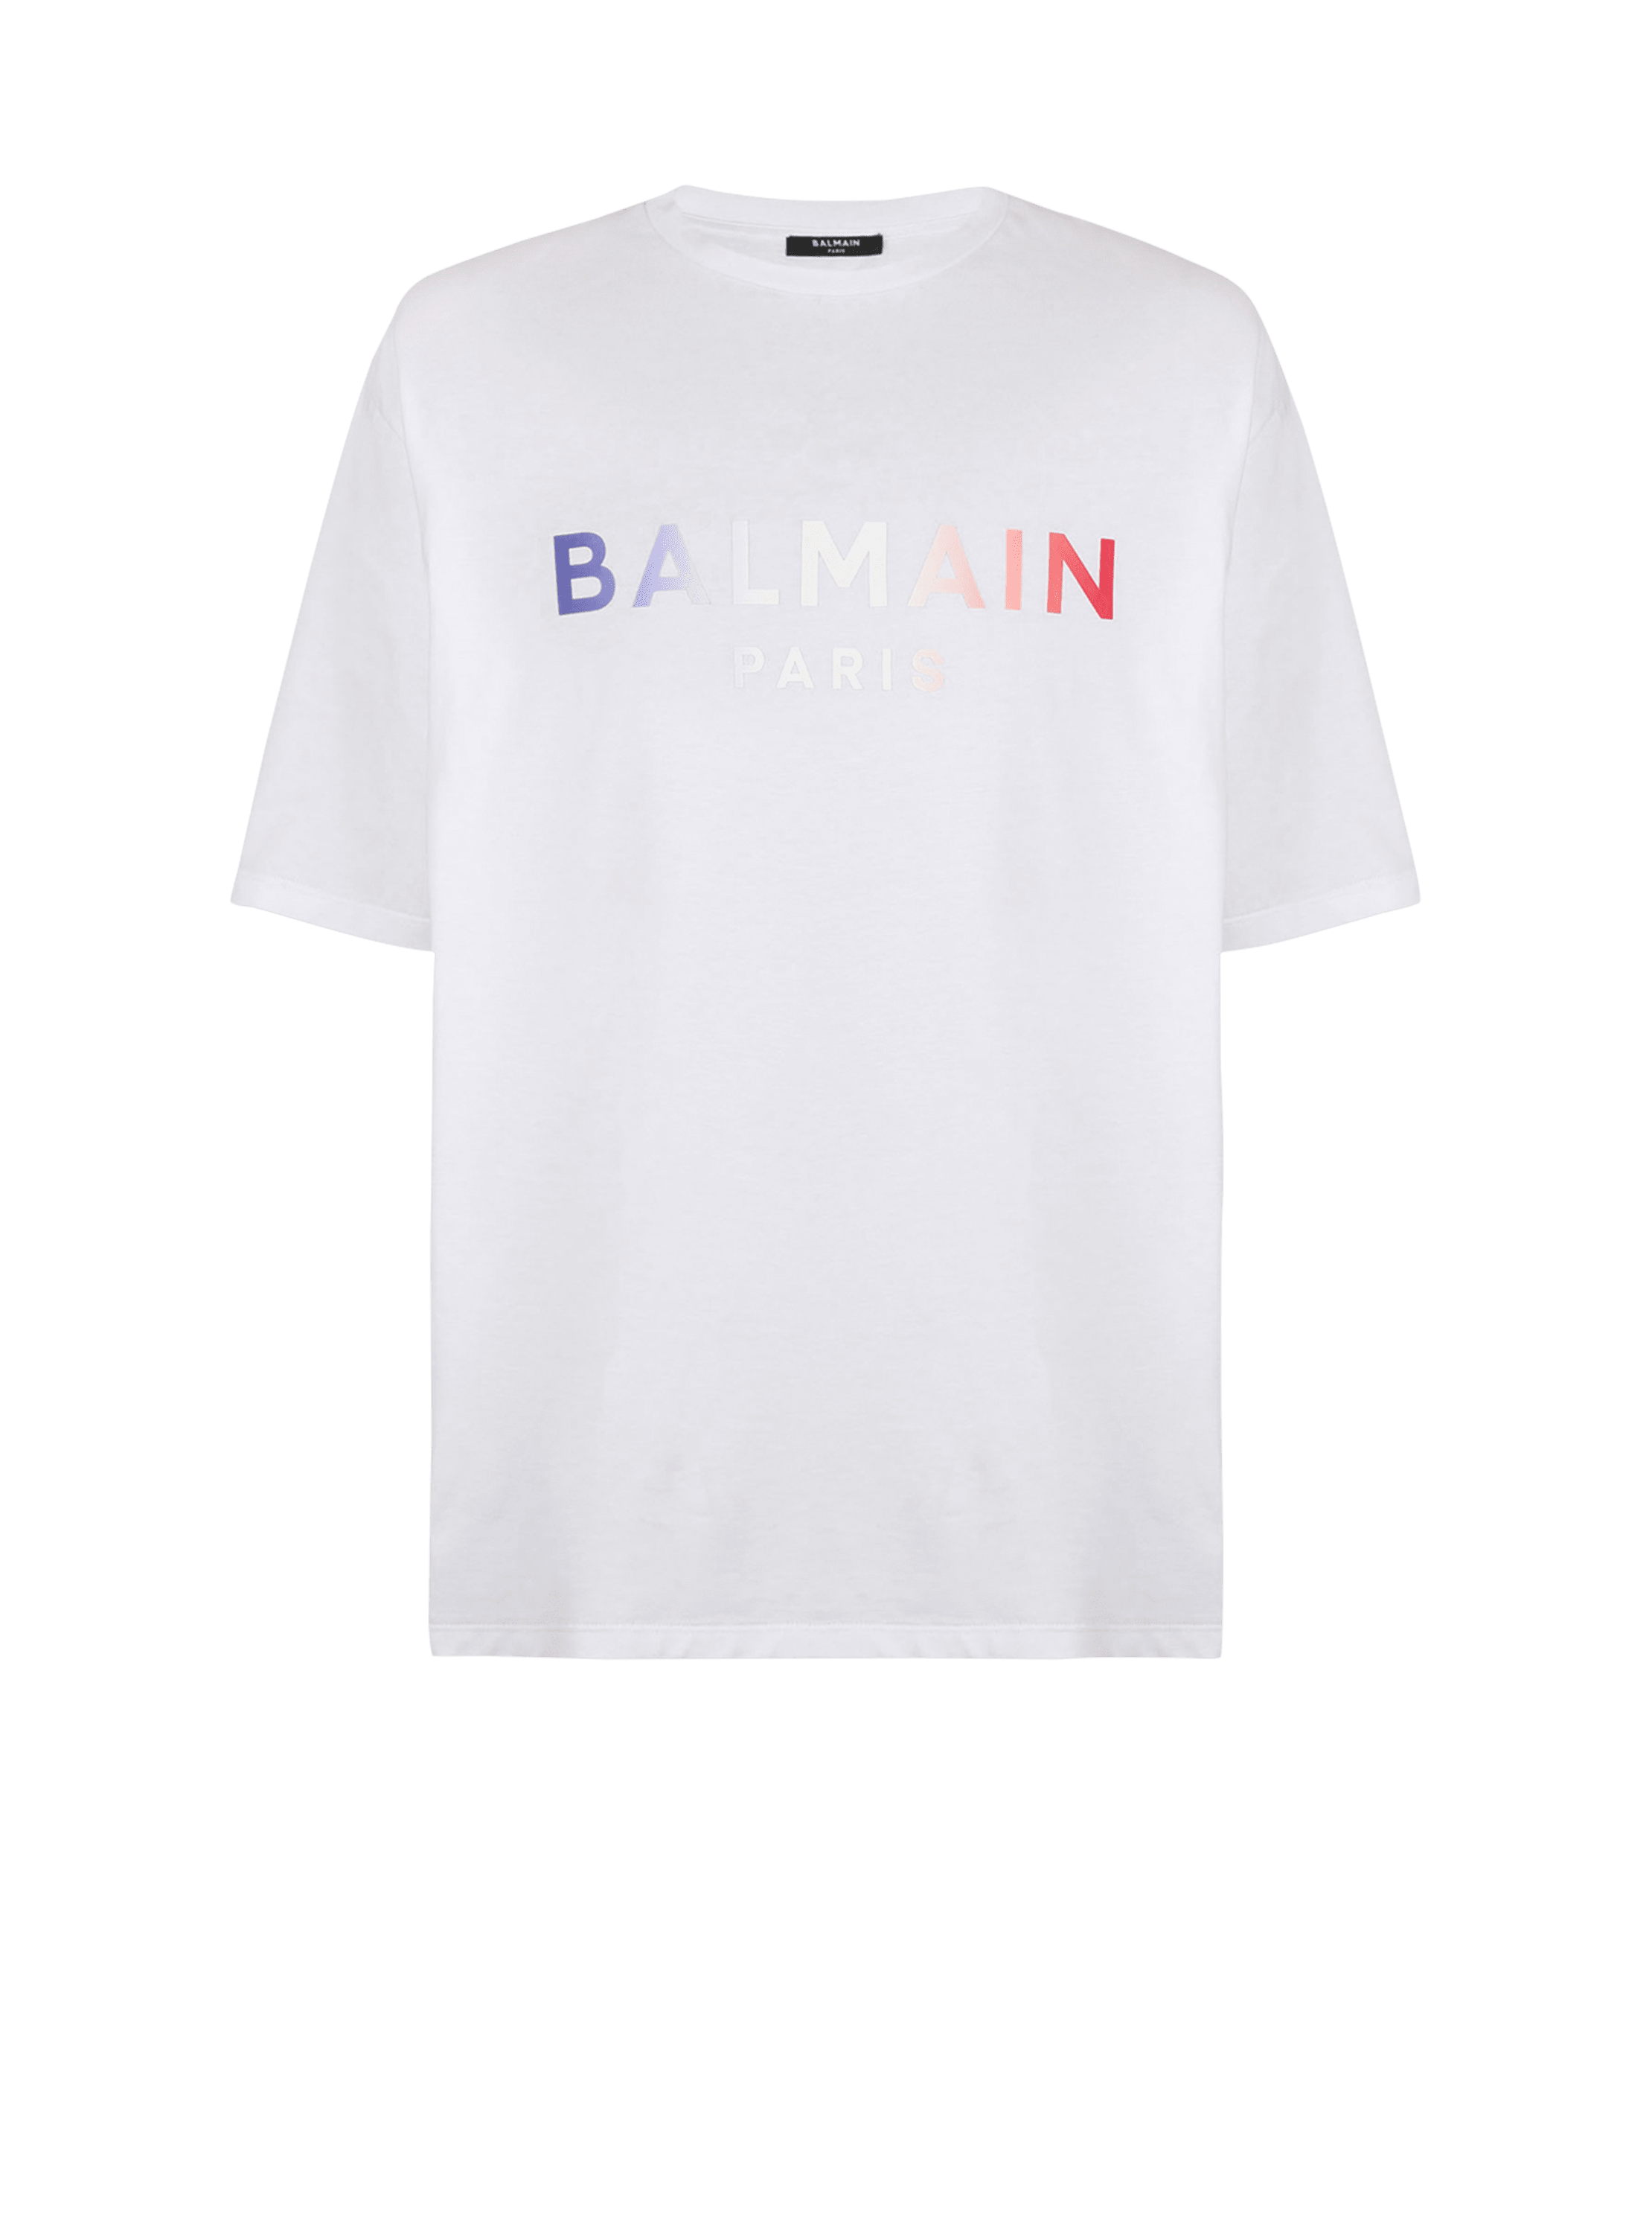 HIGH SUMMER CAPSULE -Cotton T-shirt with Balmain Paris tie-dye logo print, white, hi-res